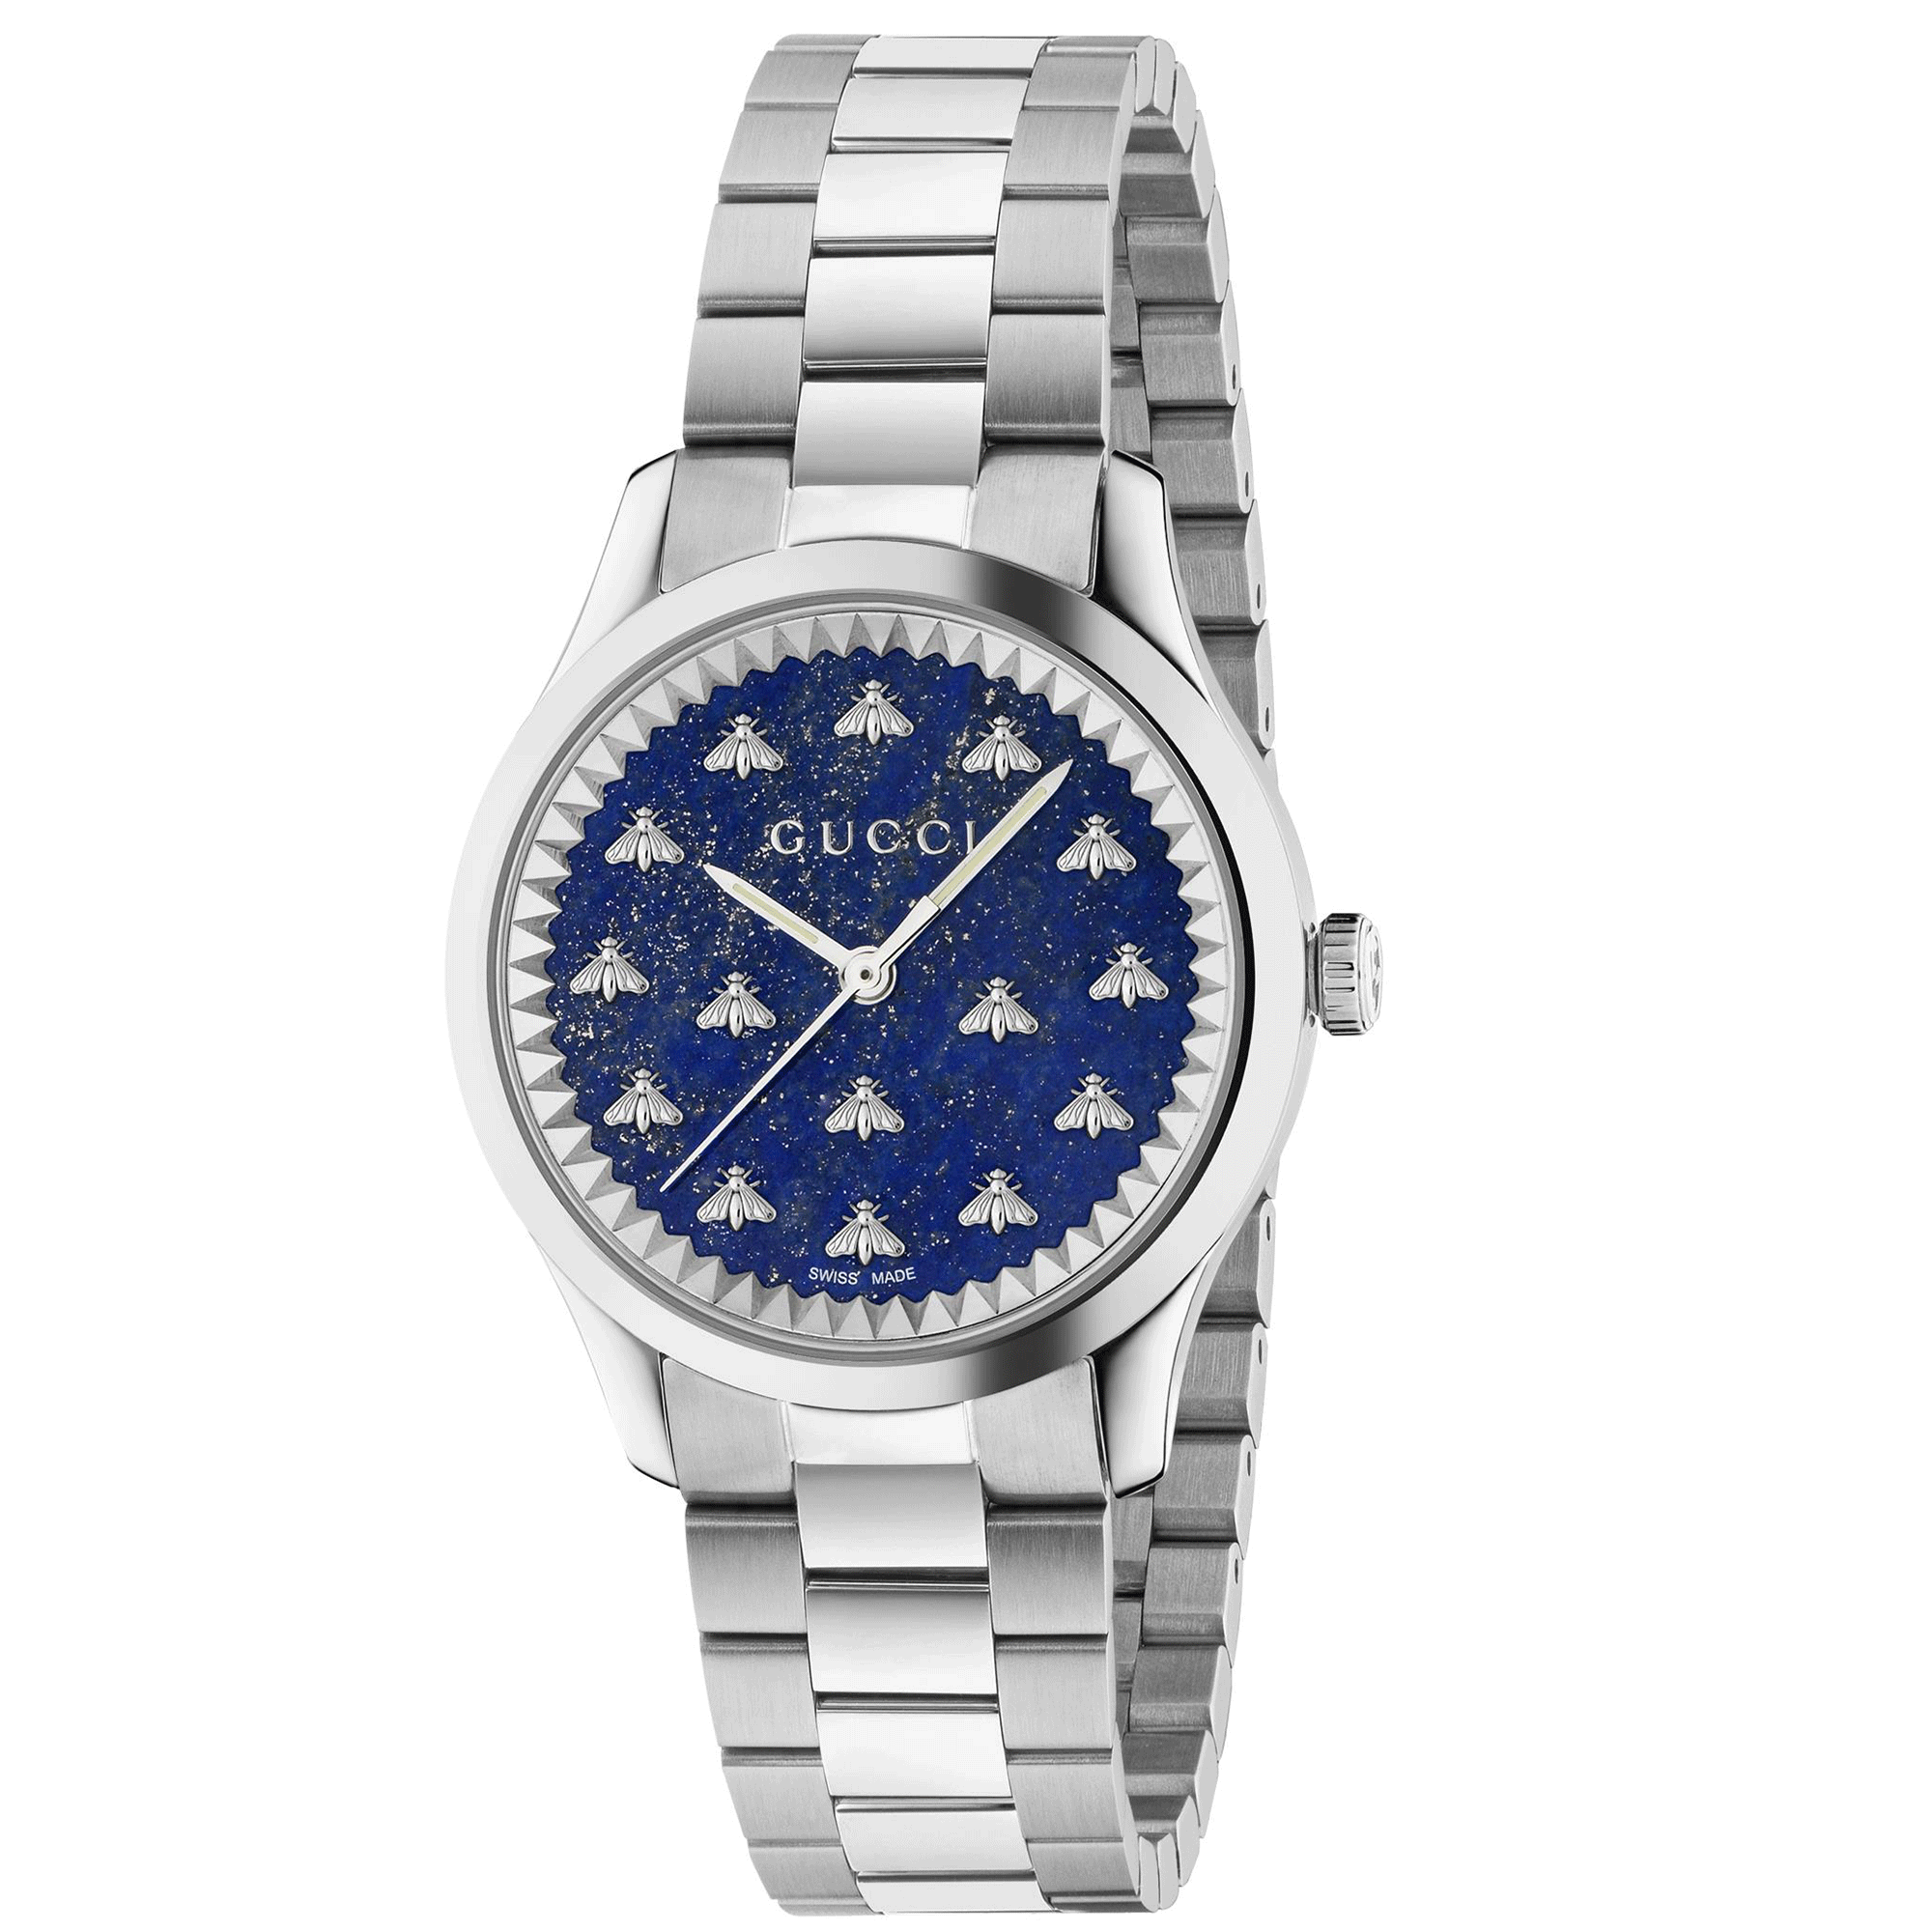 Gucci G-Timeless 32mm Quartz Watch With A Lapis Lazuli Dial.